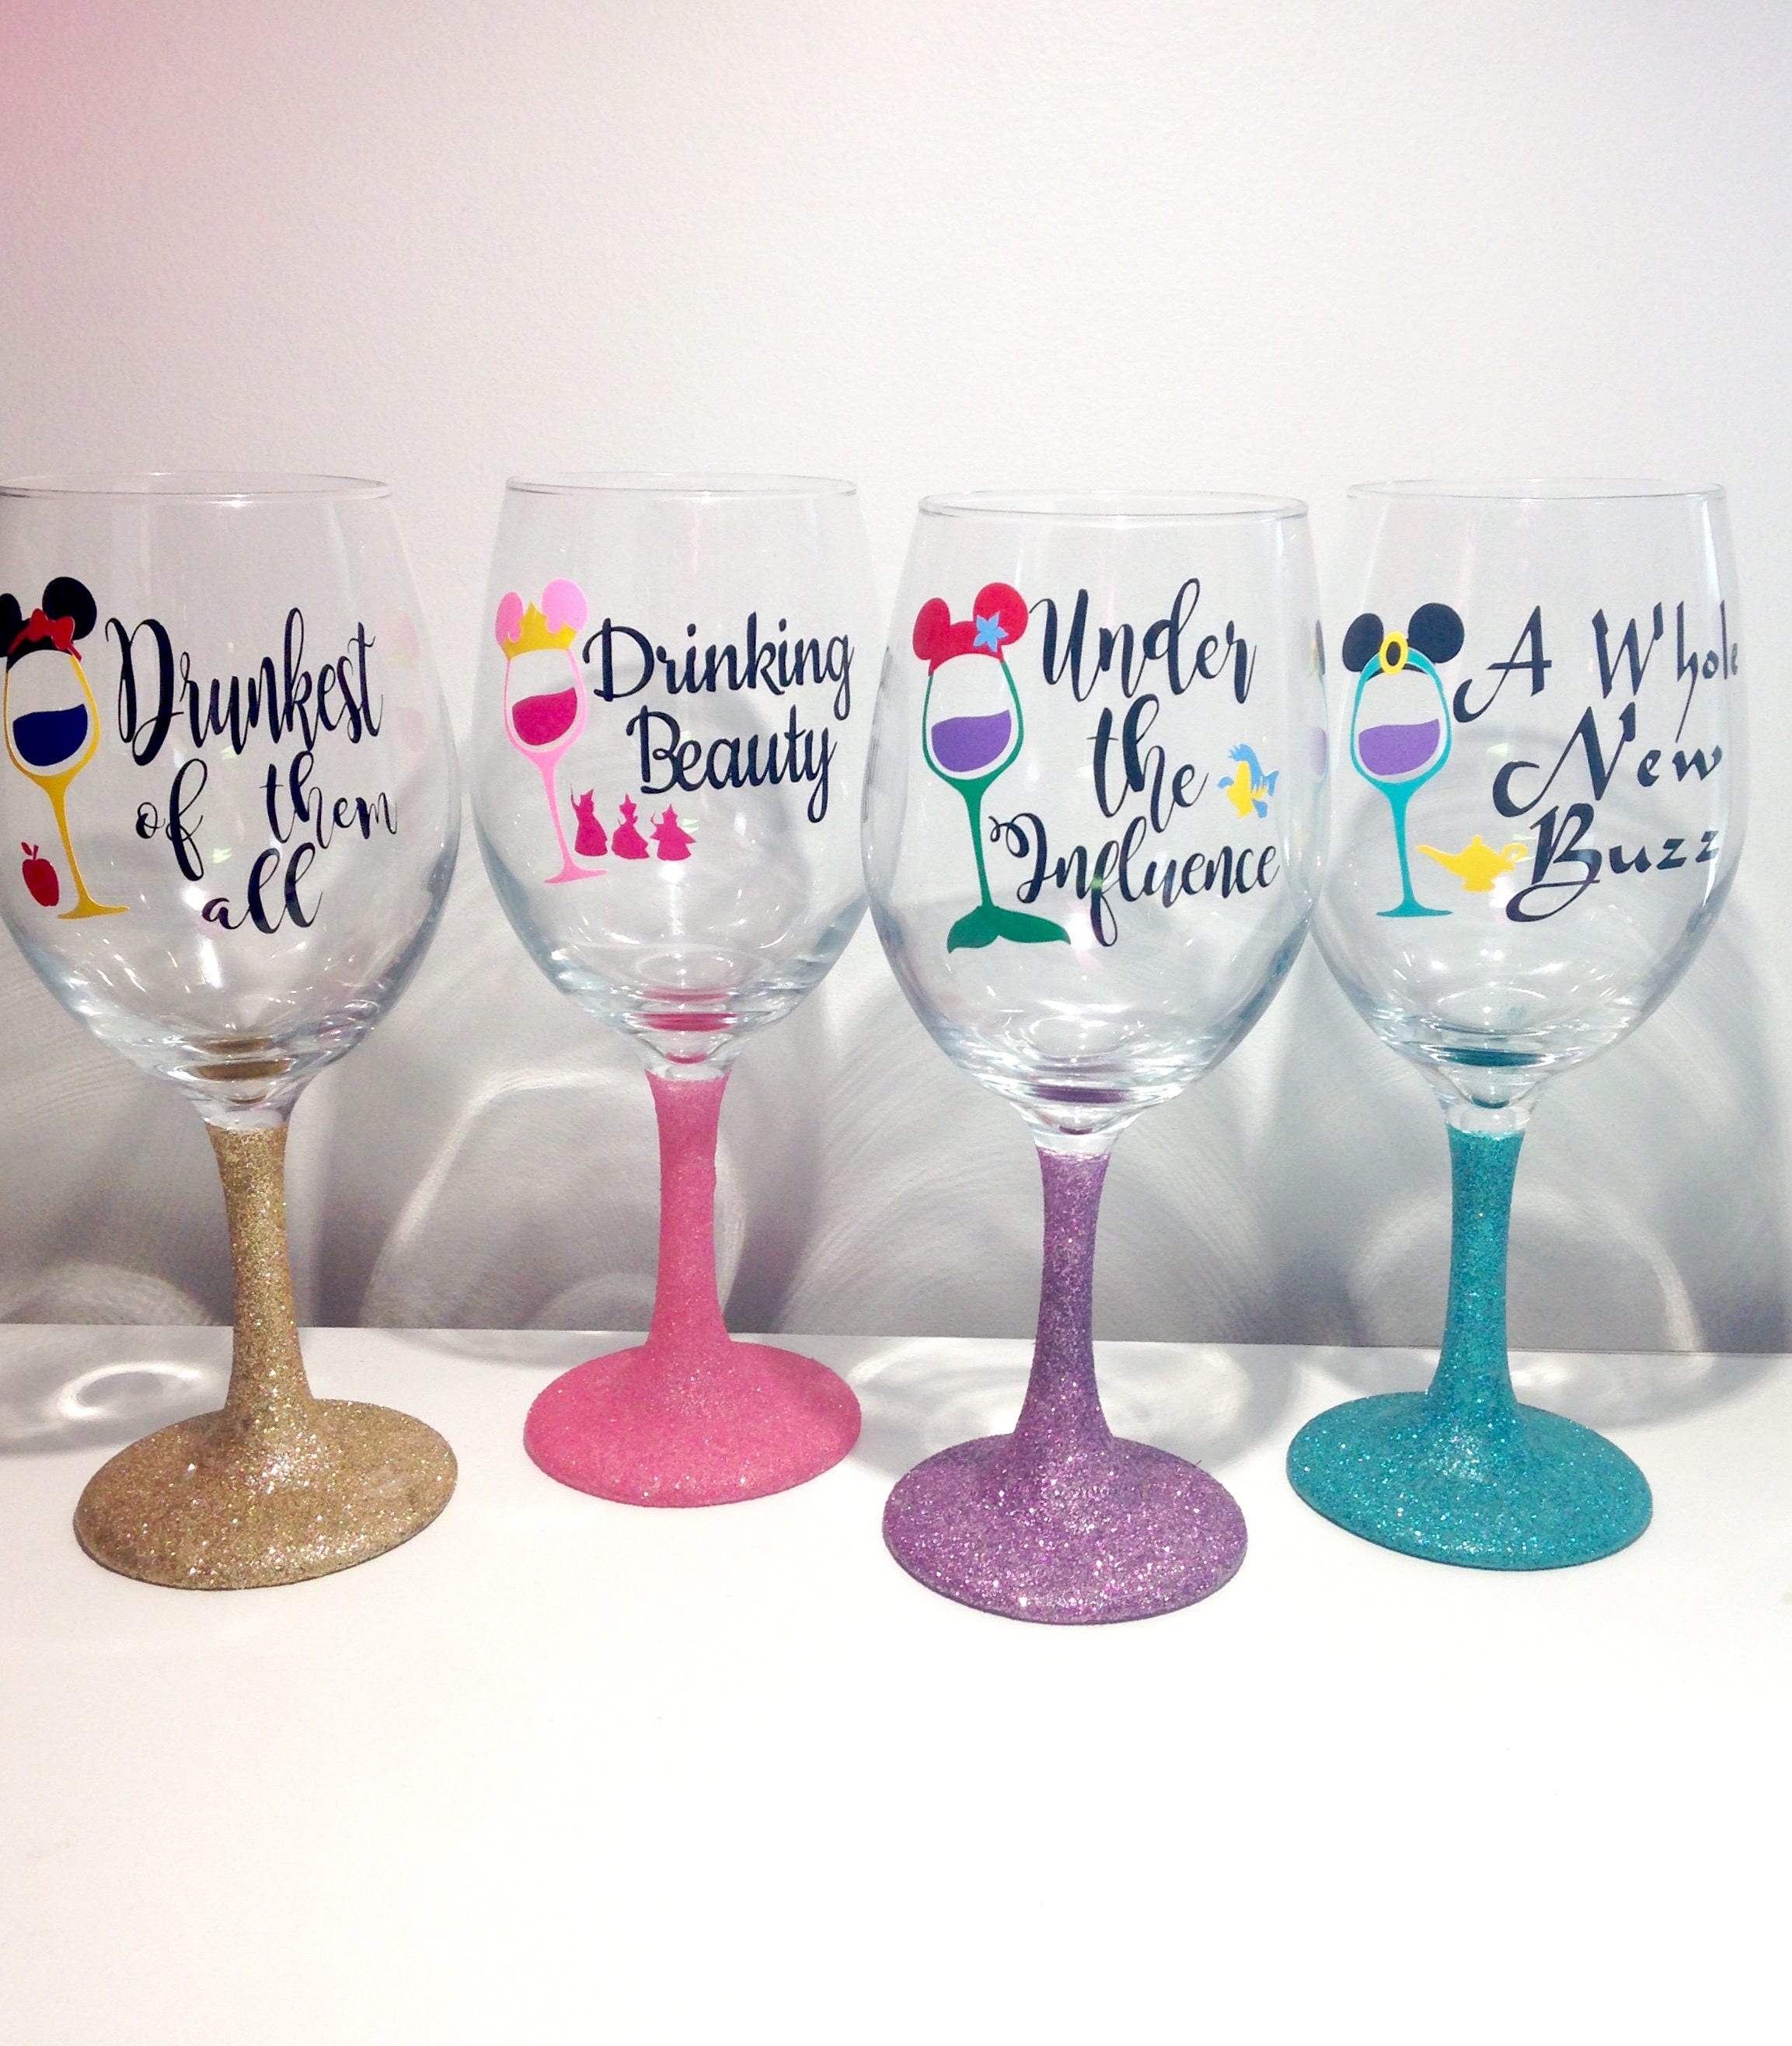 SALE Disney princess inspired wine glasses. Drinking beauty.